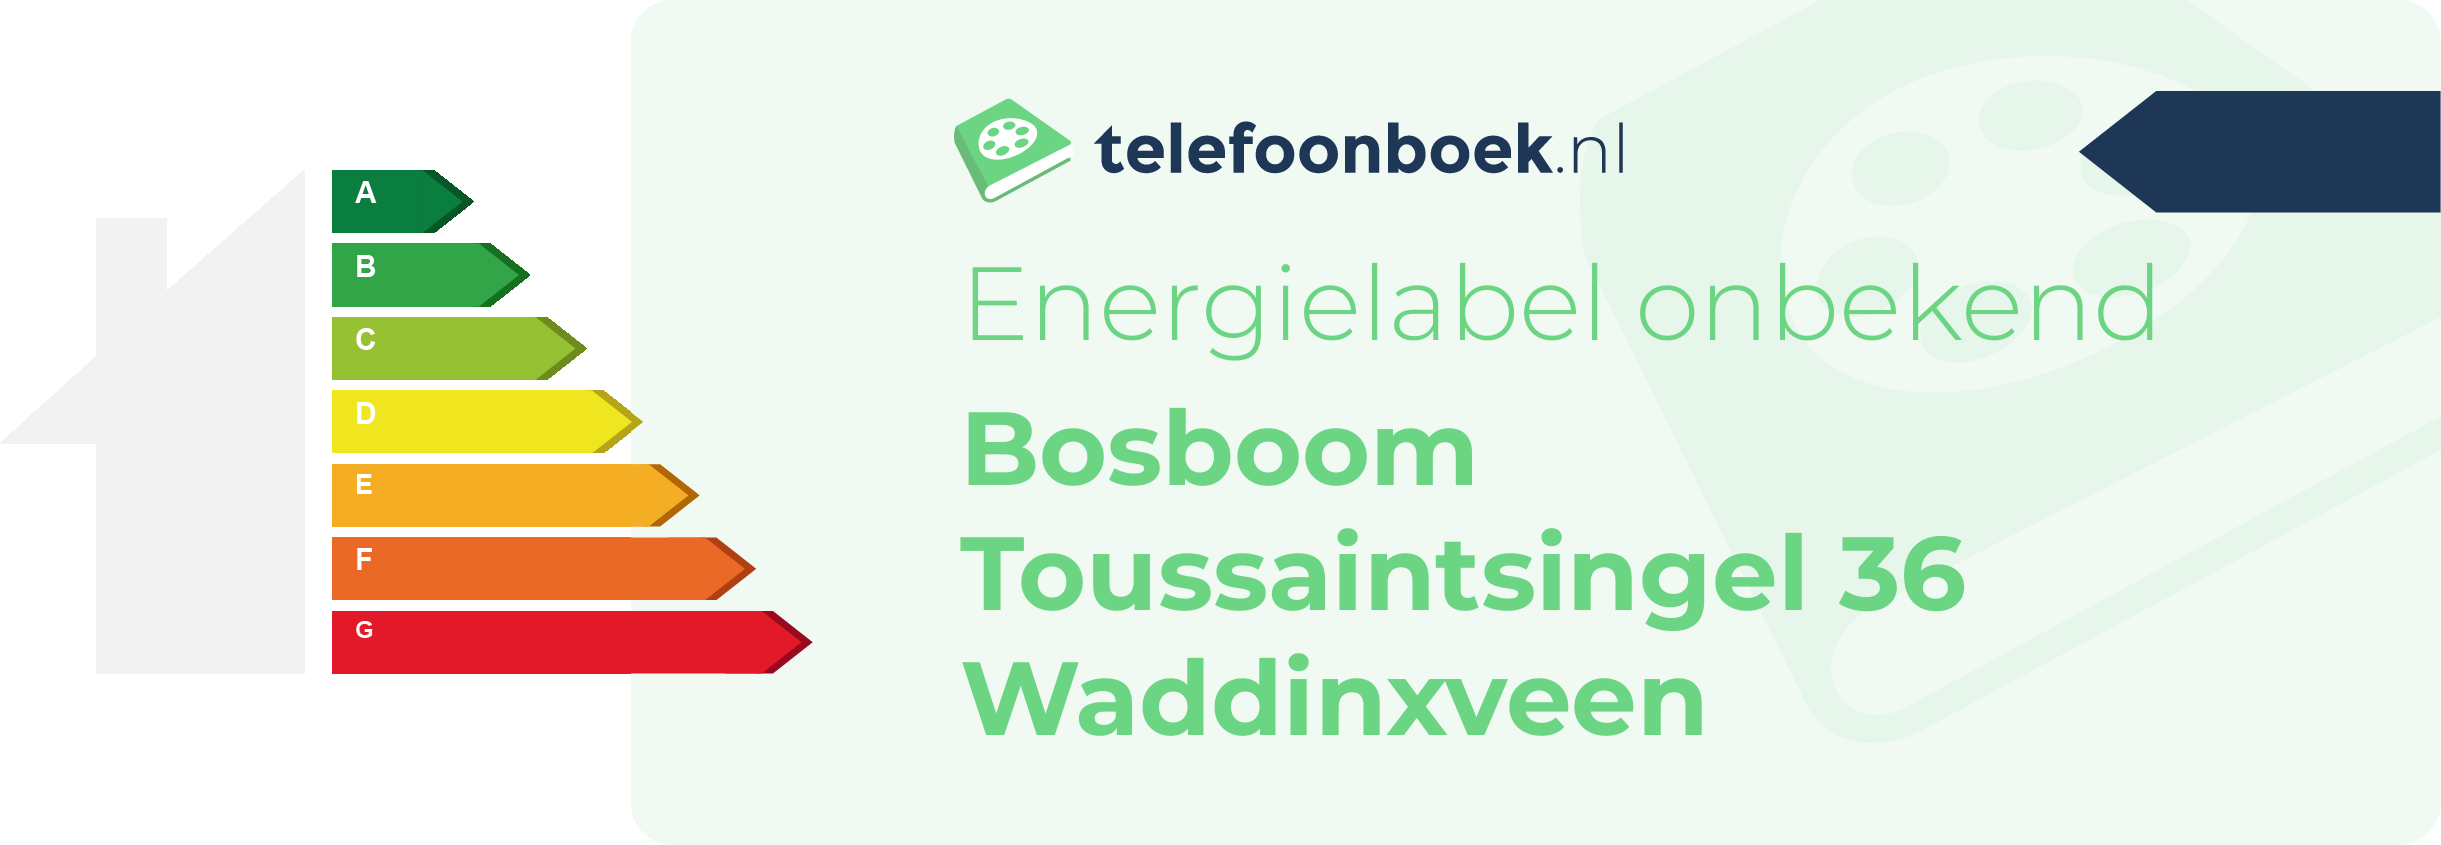 Energielabel Bosboom Toussaintsingel 36 Waddinxveen